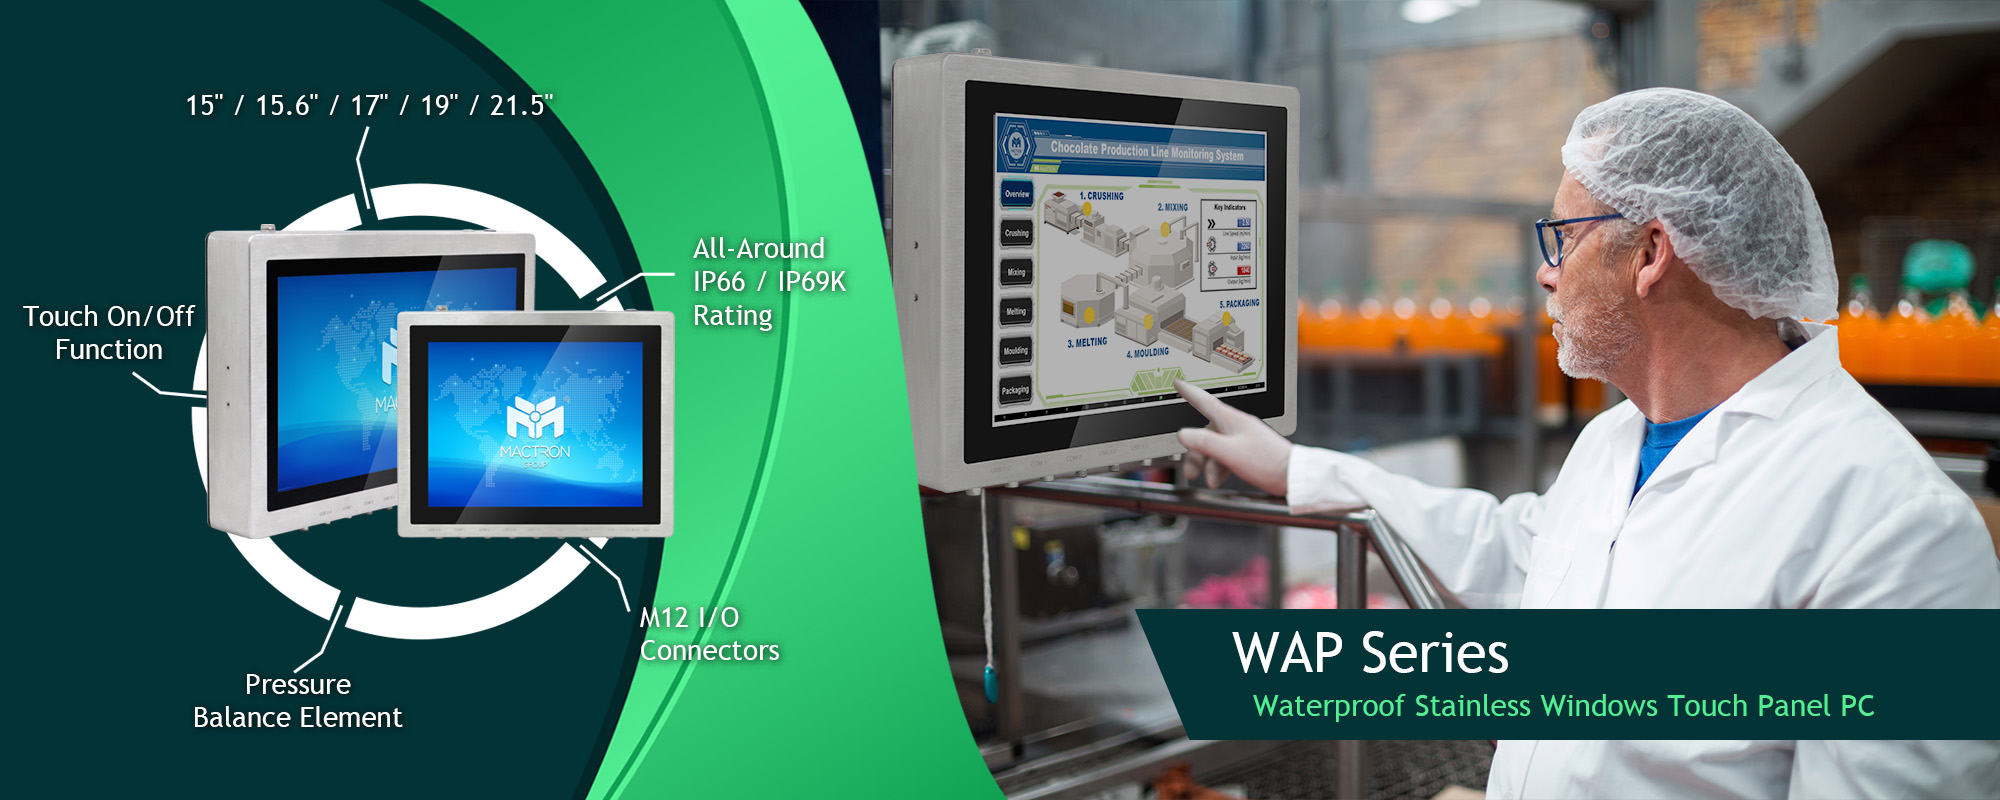 WAP Series - Waterproof Stainless Windows Touch Panel PC